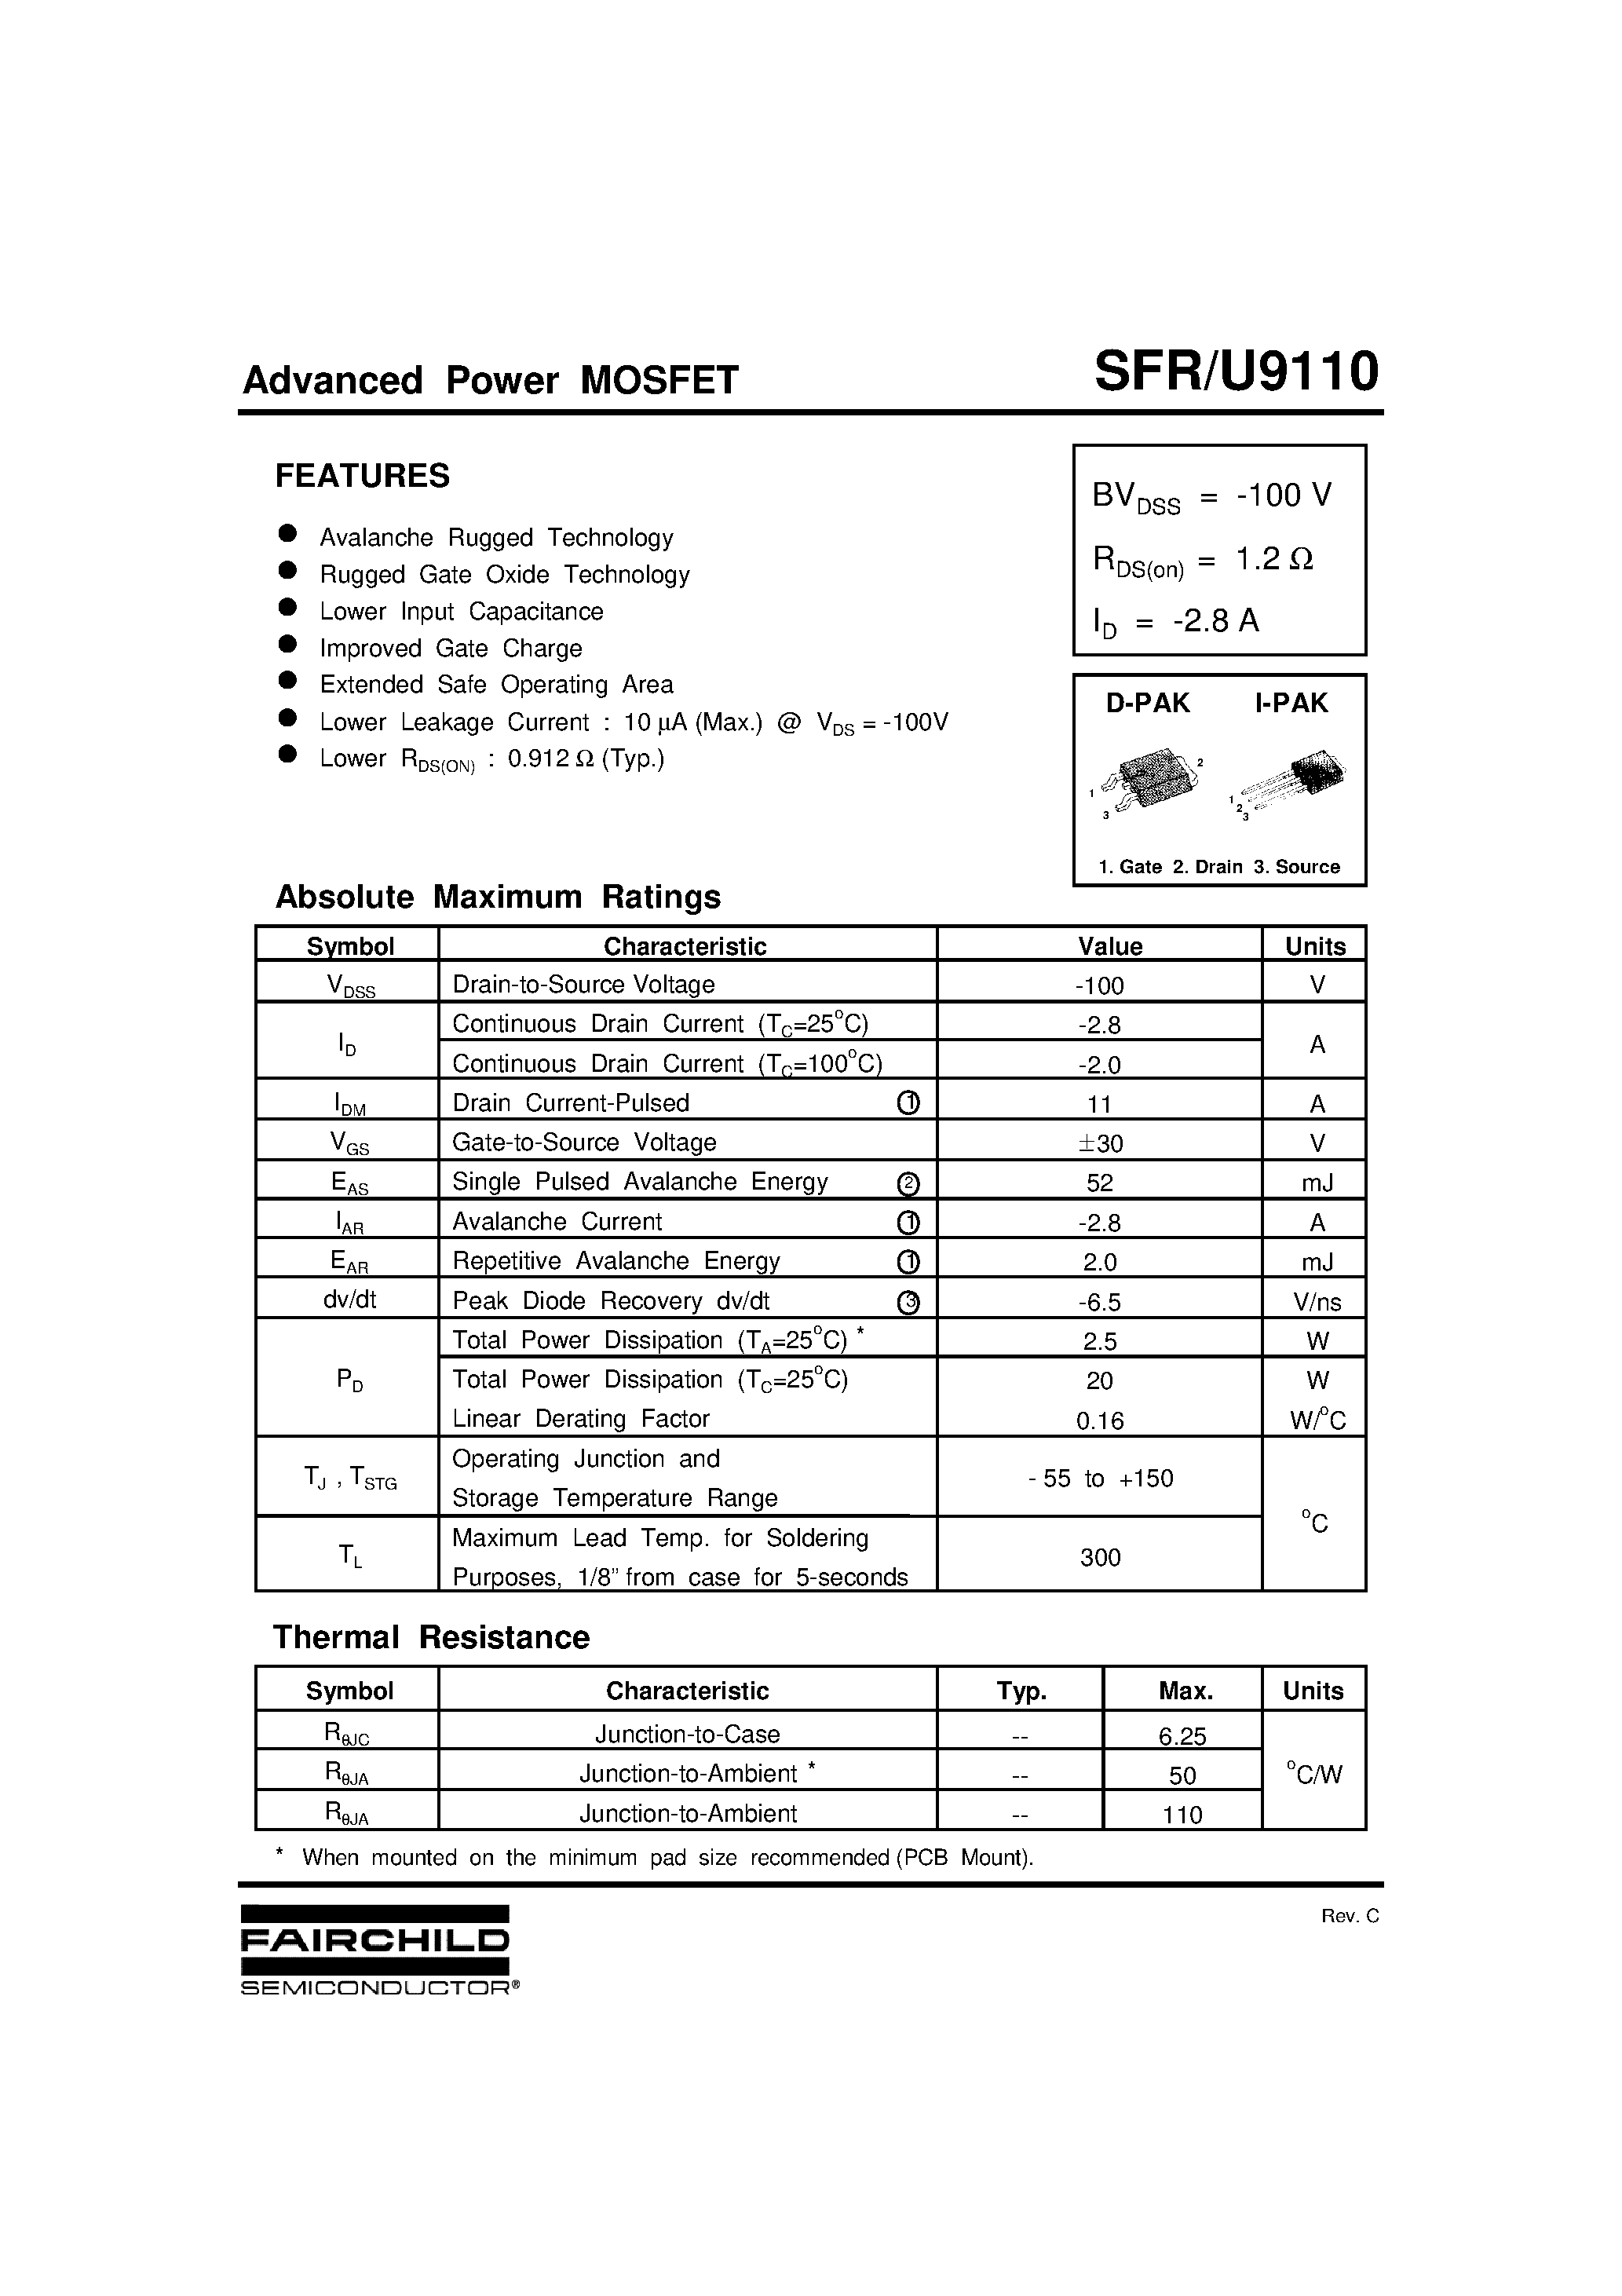 Datasheet SFR9110 - Advanced Power MOSFET page 1